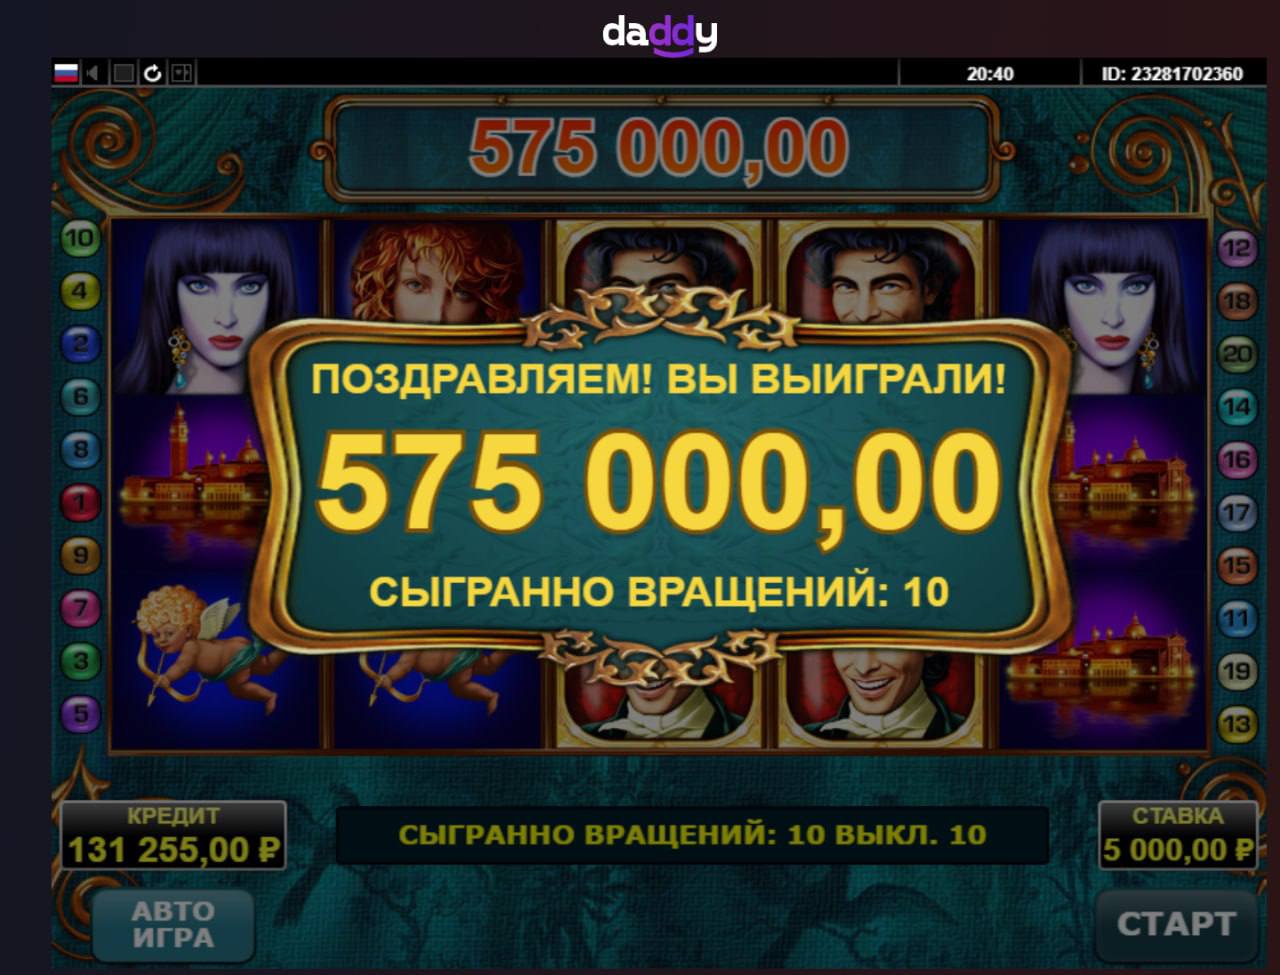 Daddy casino бонус daddy casino site. Daddy Casino 982.